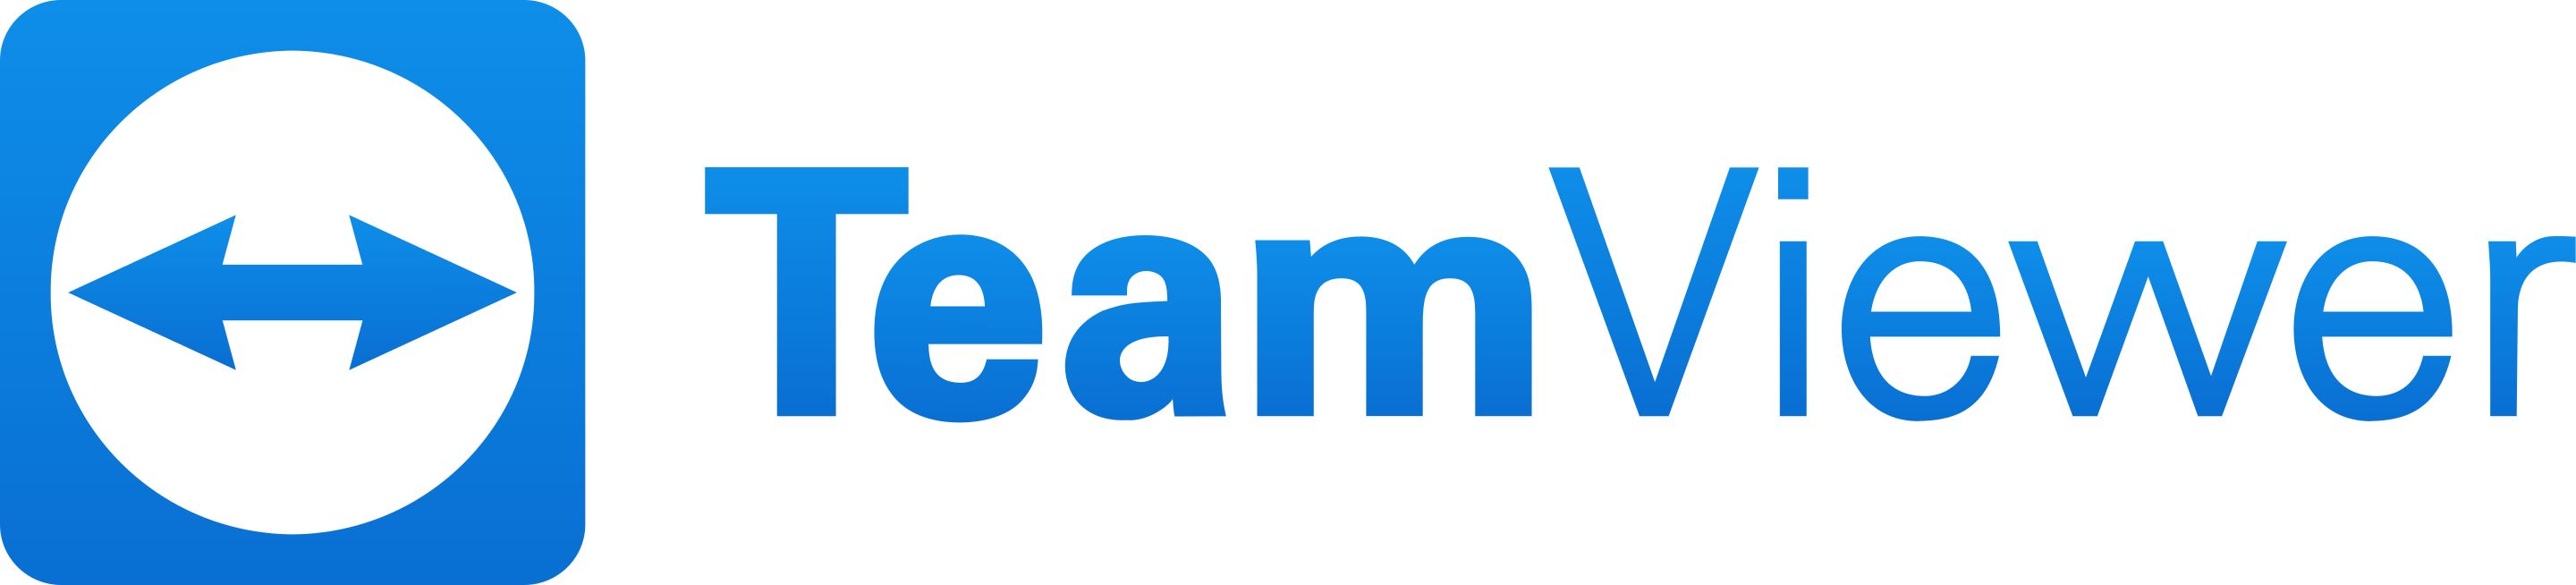 TeamViewer_logo.